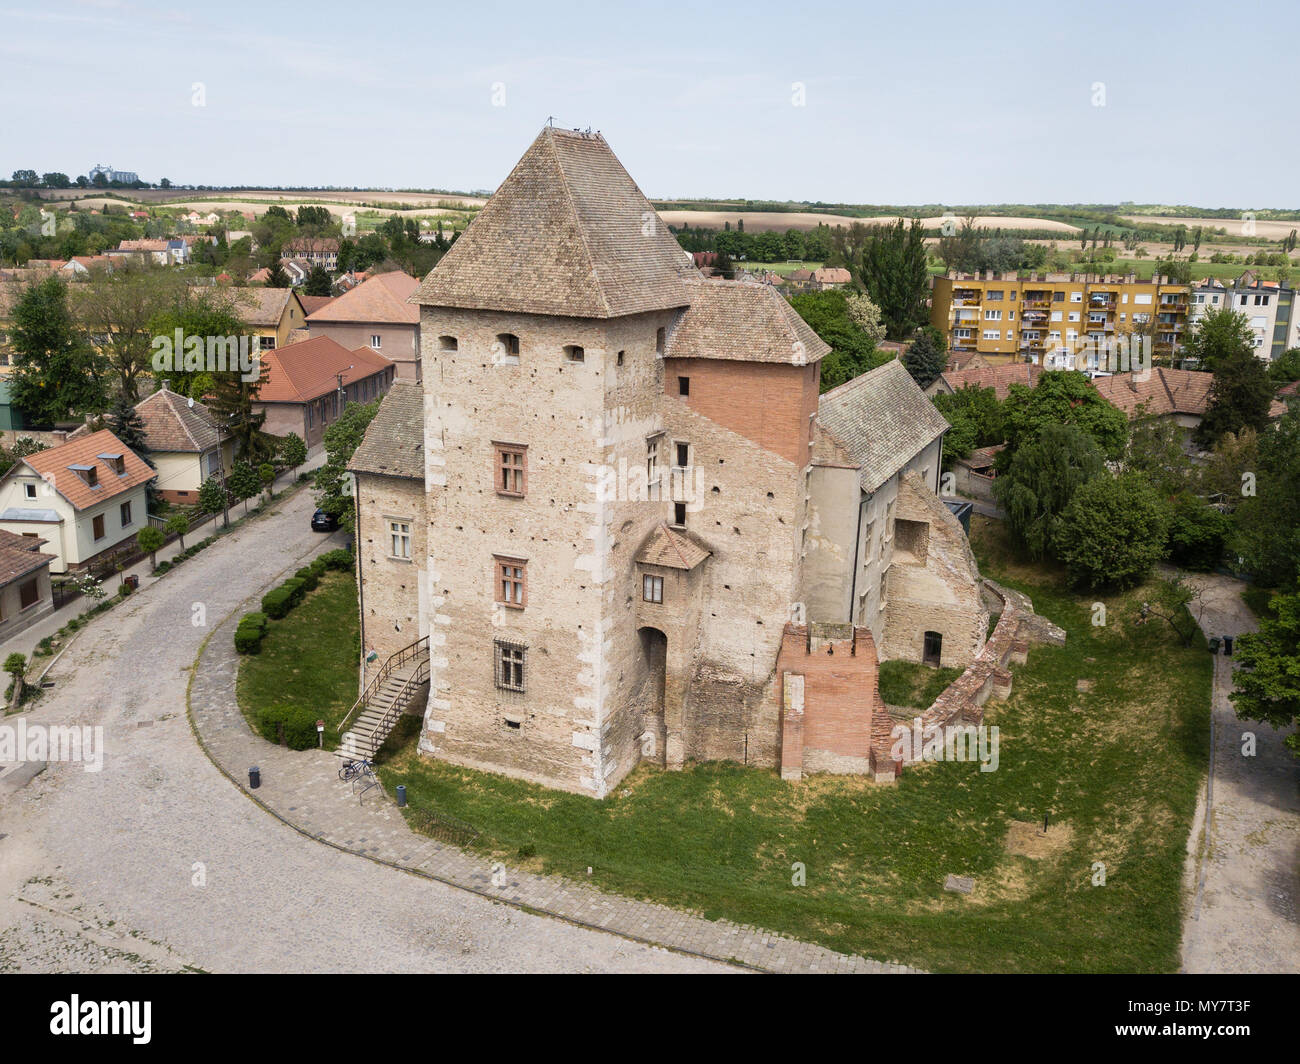 Simontornya, Hungary - APRIL 26, 2018: Aerial top view to medieval castle of Simontornya city, Hungary, Stock Photo